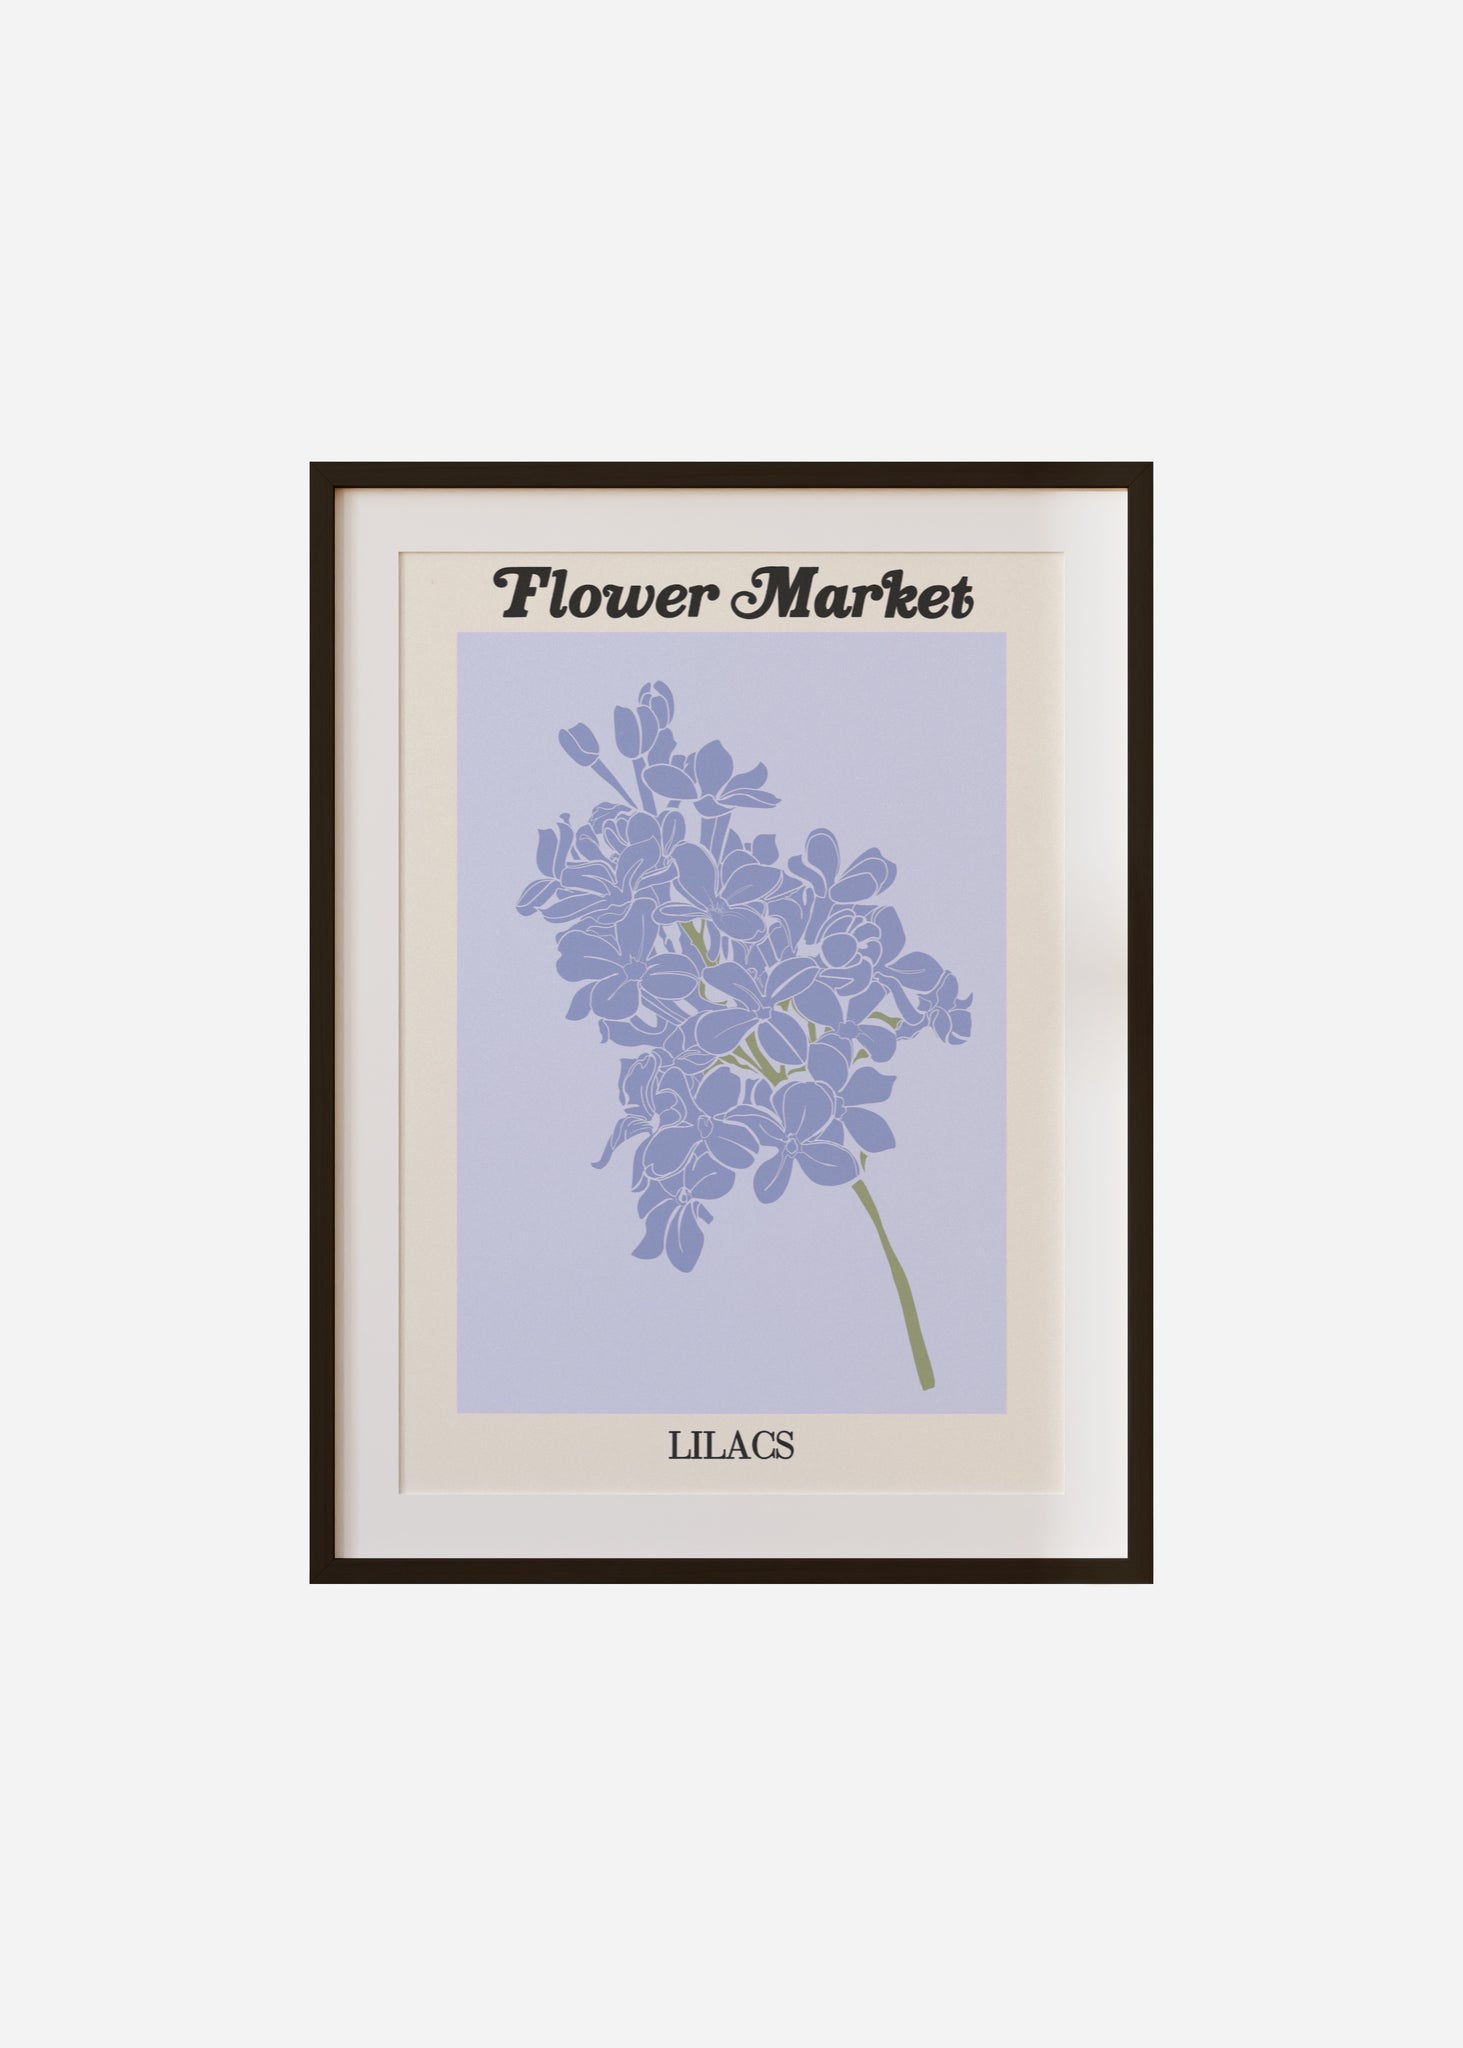 flower market / lilacs Framed & Mounted Print